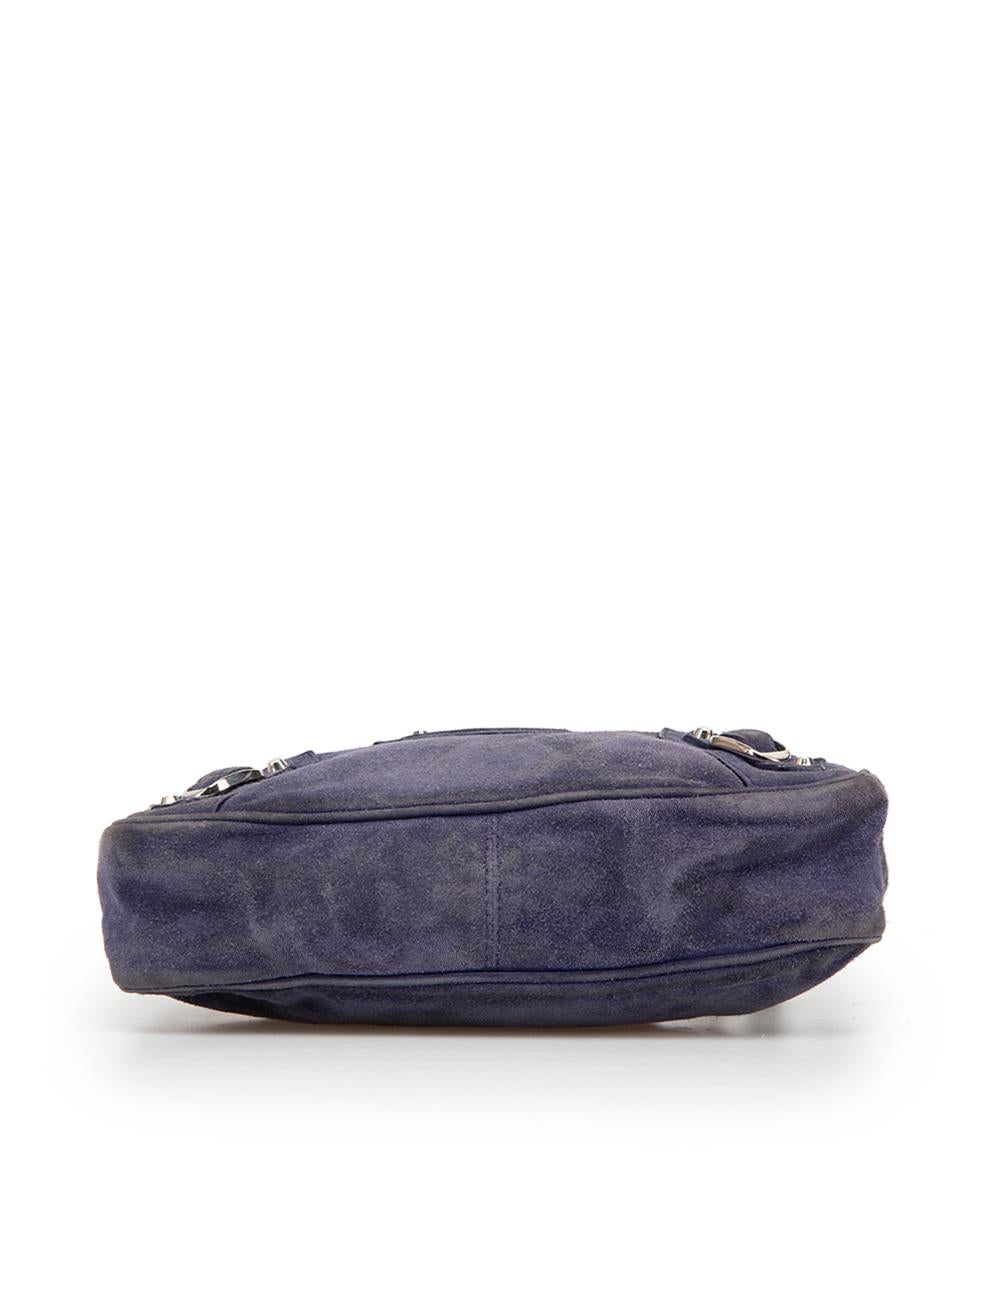 Balenciaga Women's Purple Suede Crossbody Bag For Sale 1